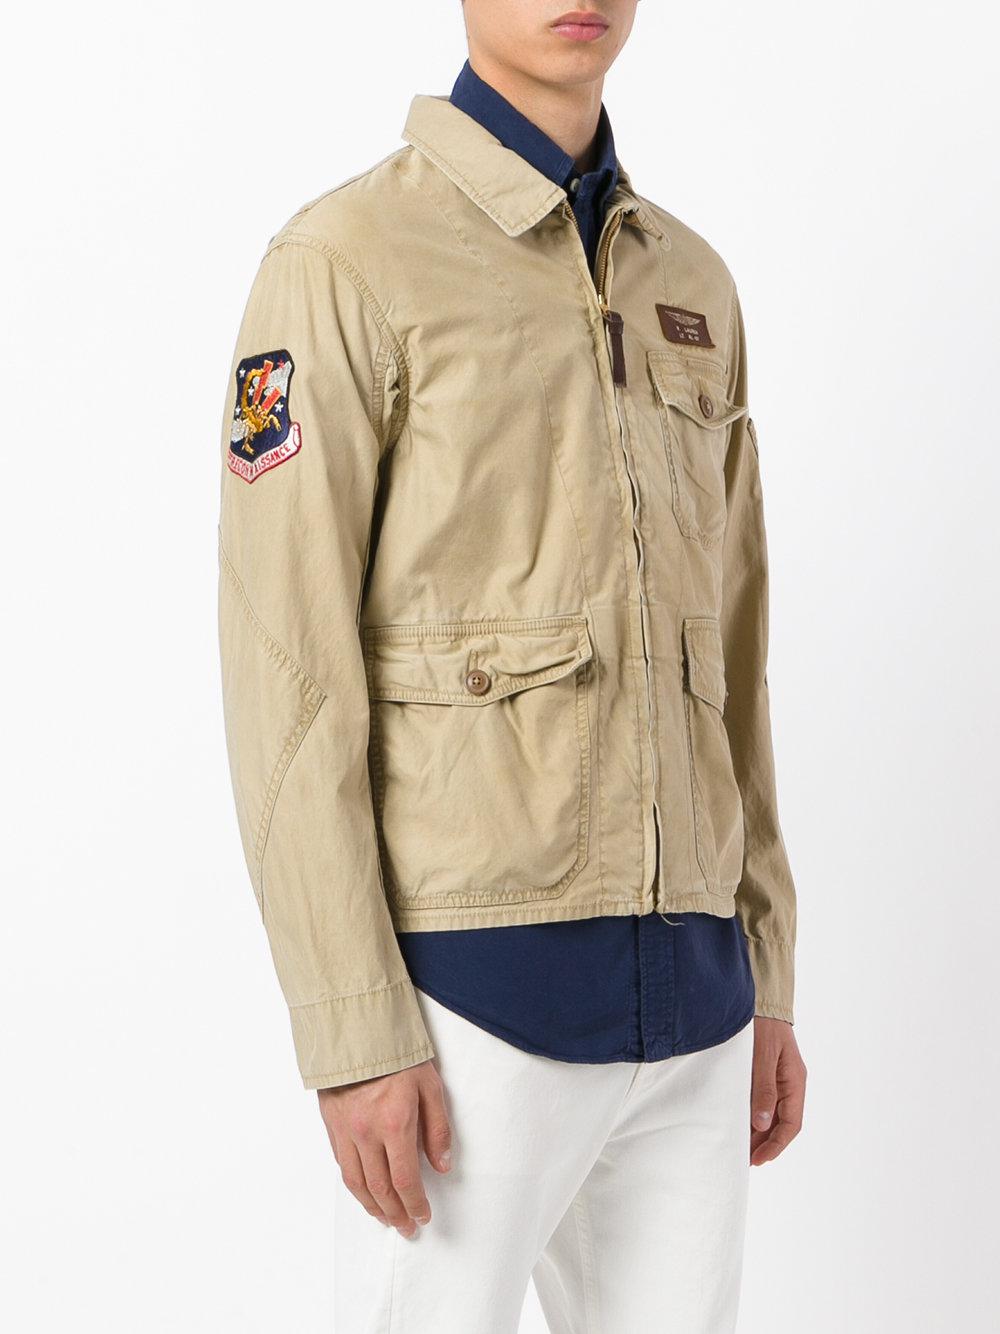 Lyst - Polo Ralph Lauren Safari Pockets Lightweight Jacket in Brown for Men